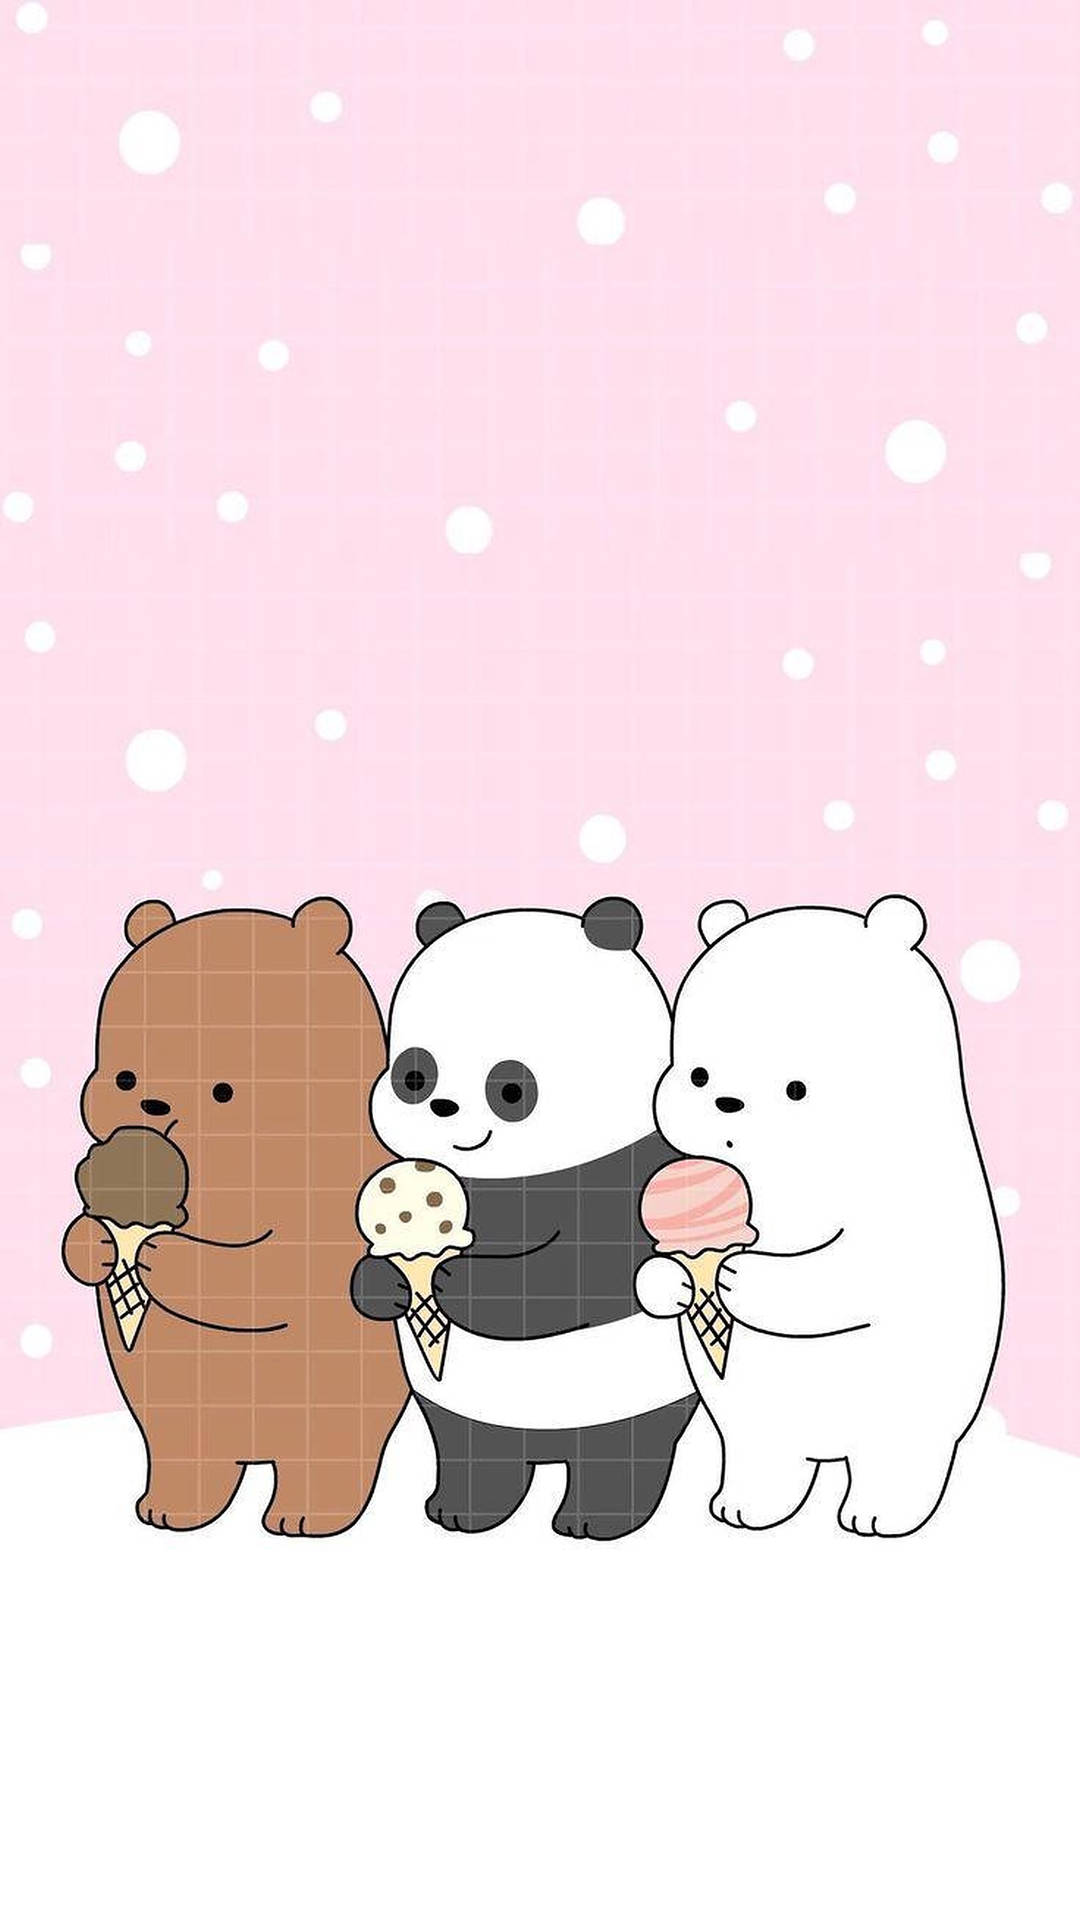 Three Cute Bears With Ice Cream Background